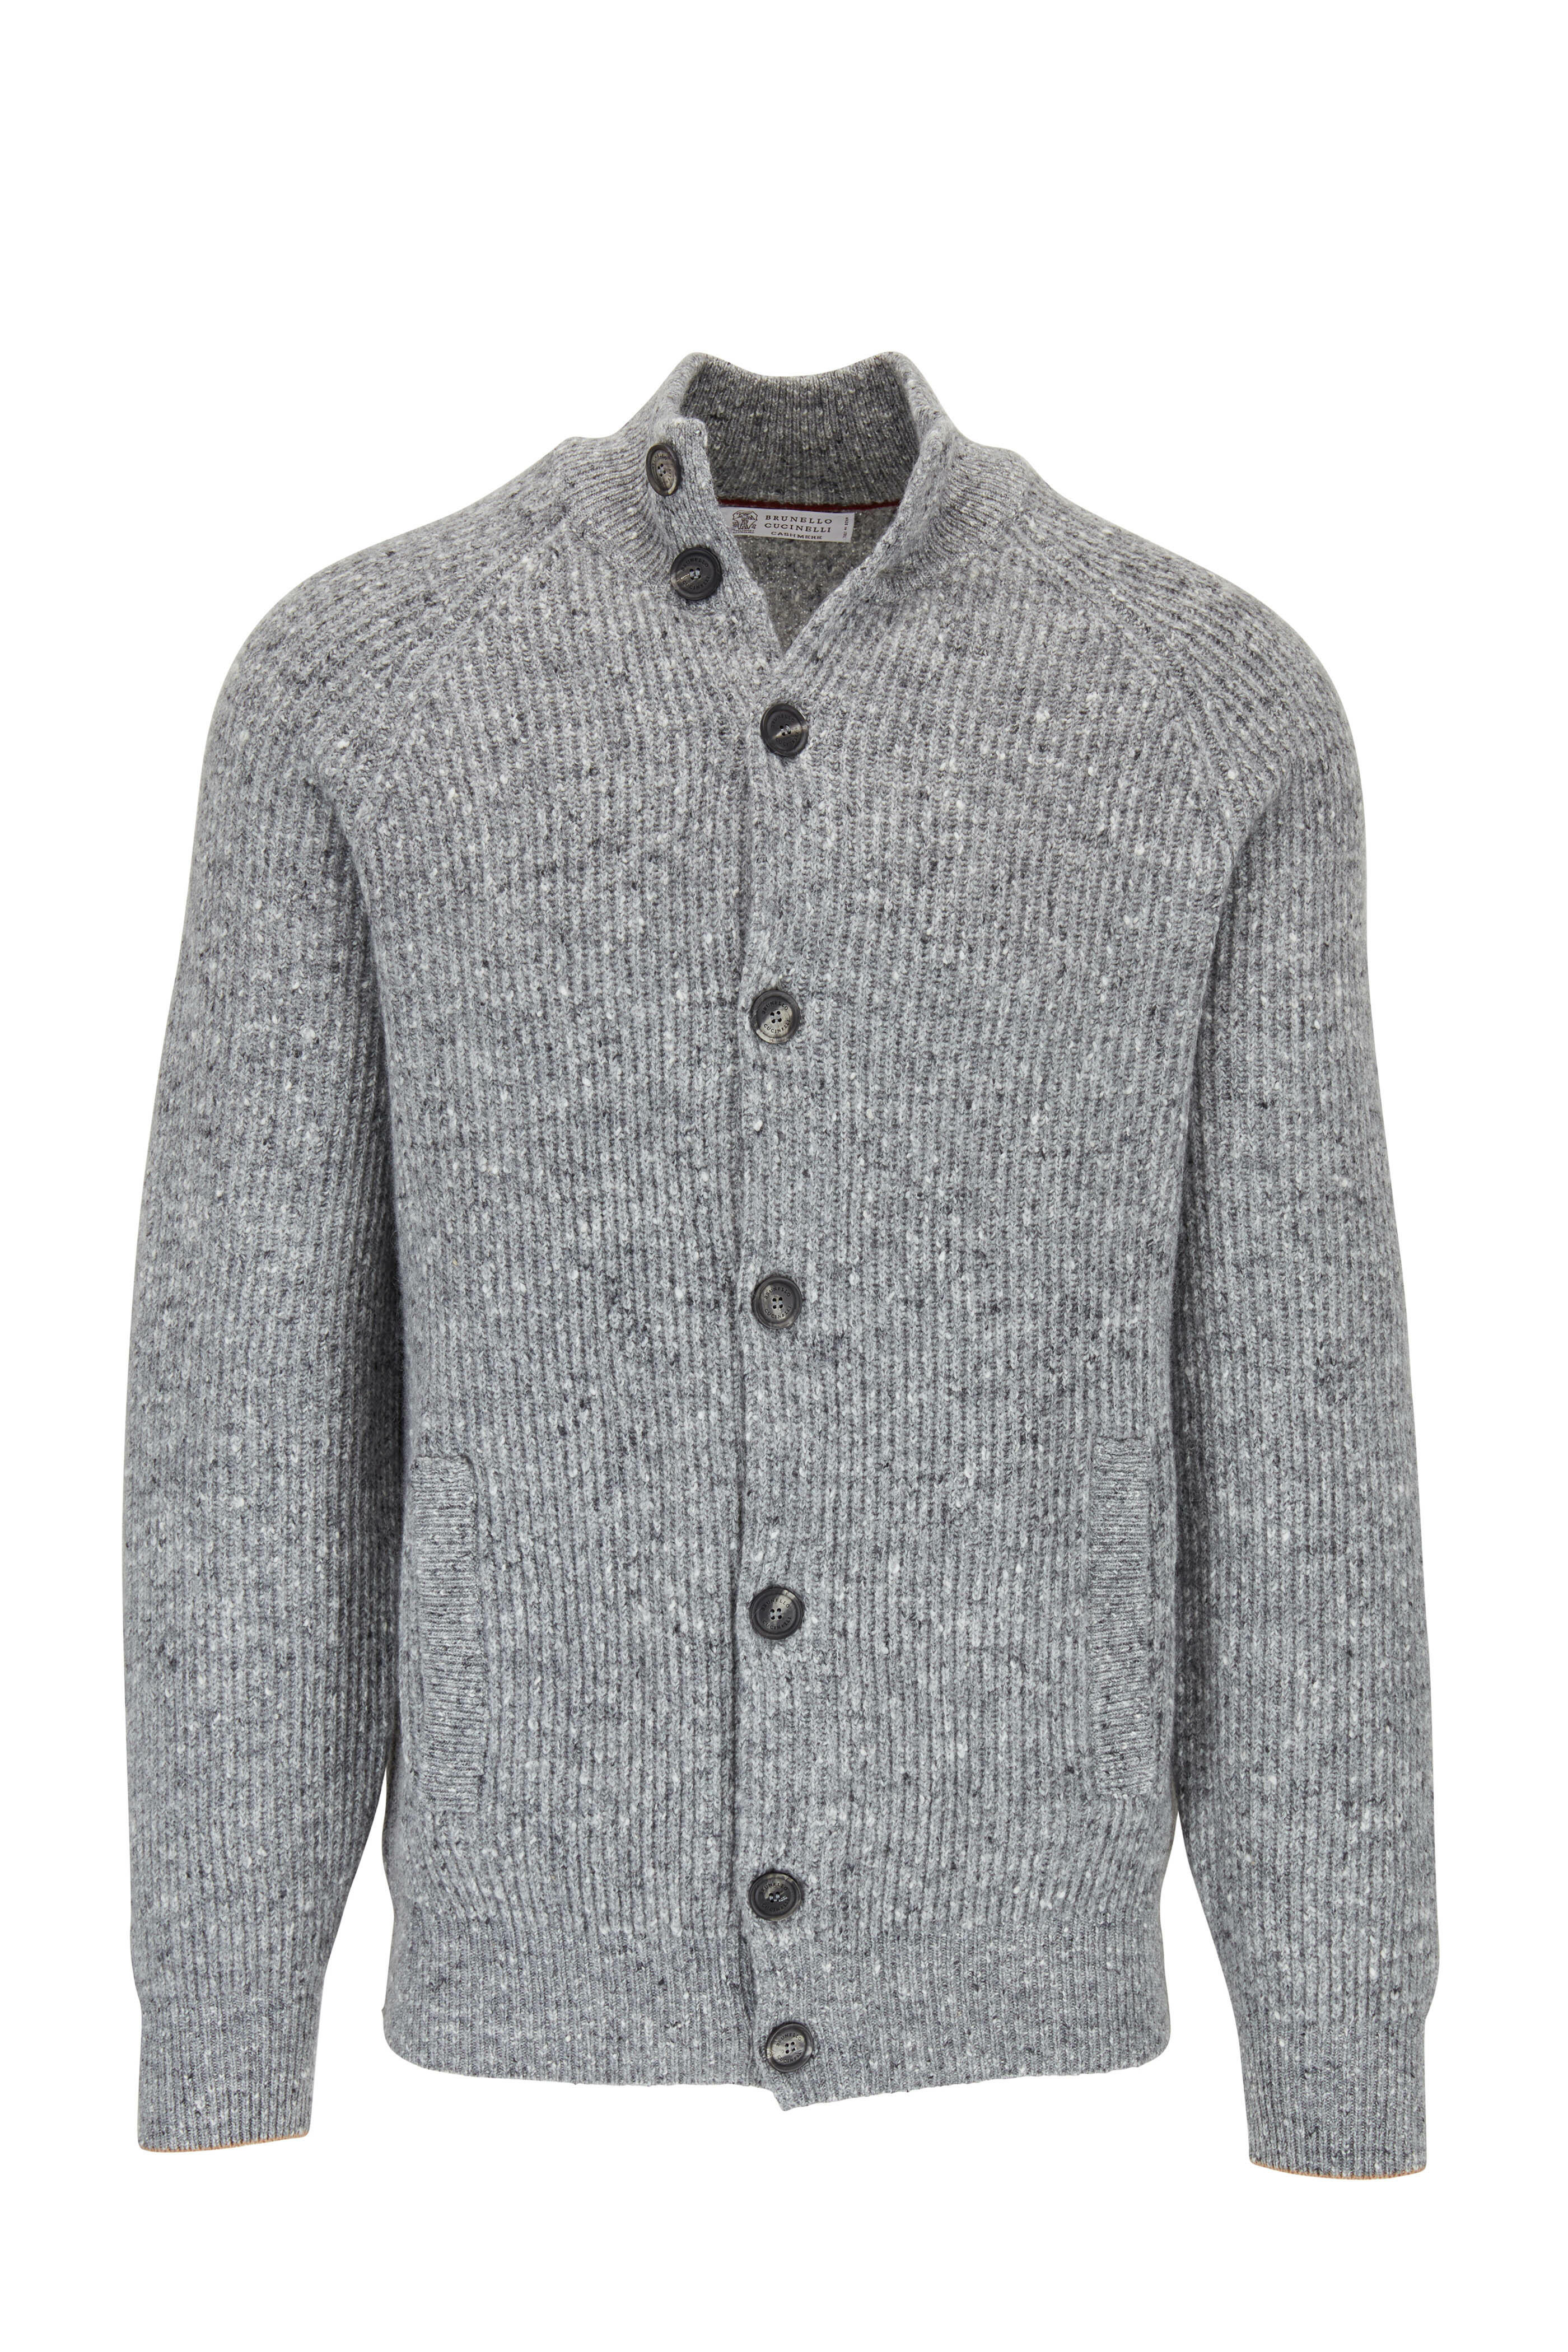 Brunello Cucinelli - Gray Melange Front Button Wool & Cashmere Cardigan